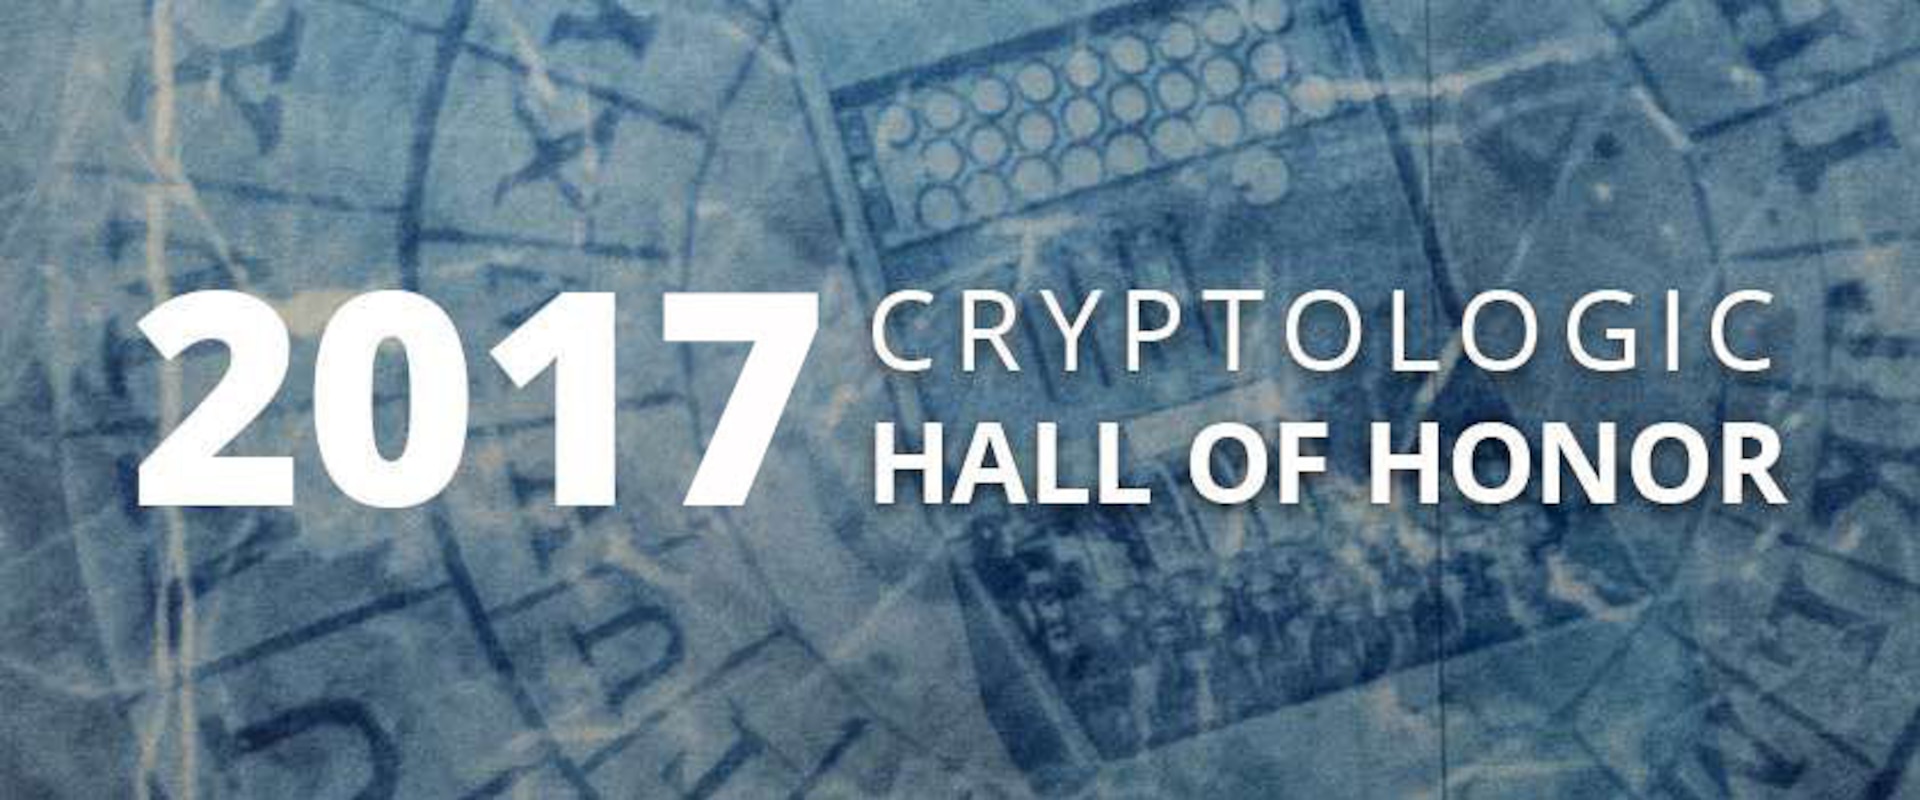 2017 Cryptologic Hall of Honor